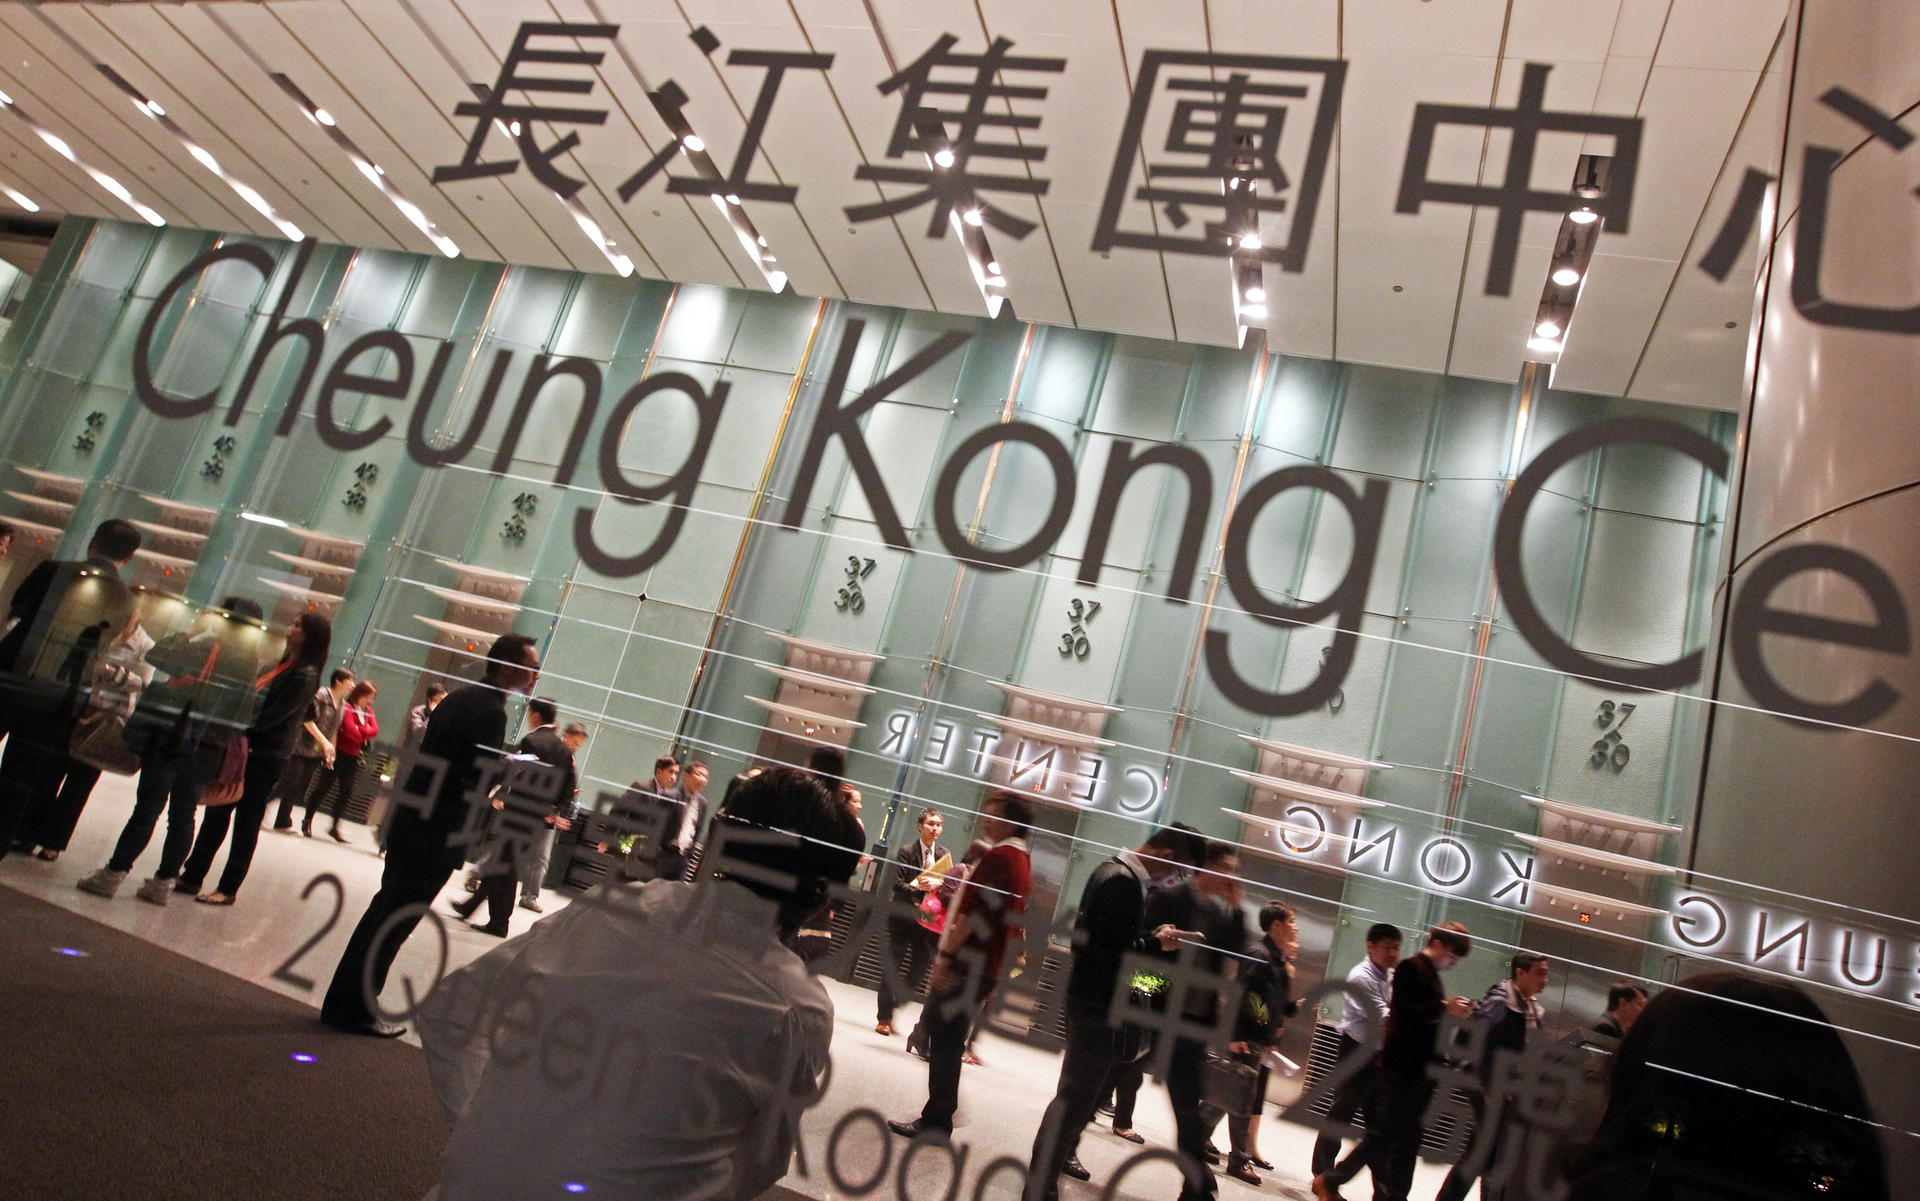 Cheung Kong issued perpetual bonds in January. Photo: Sam Tsang